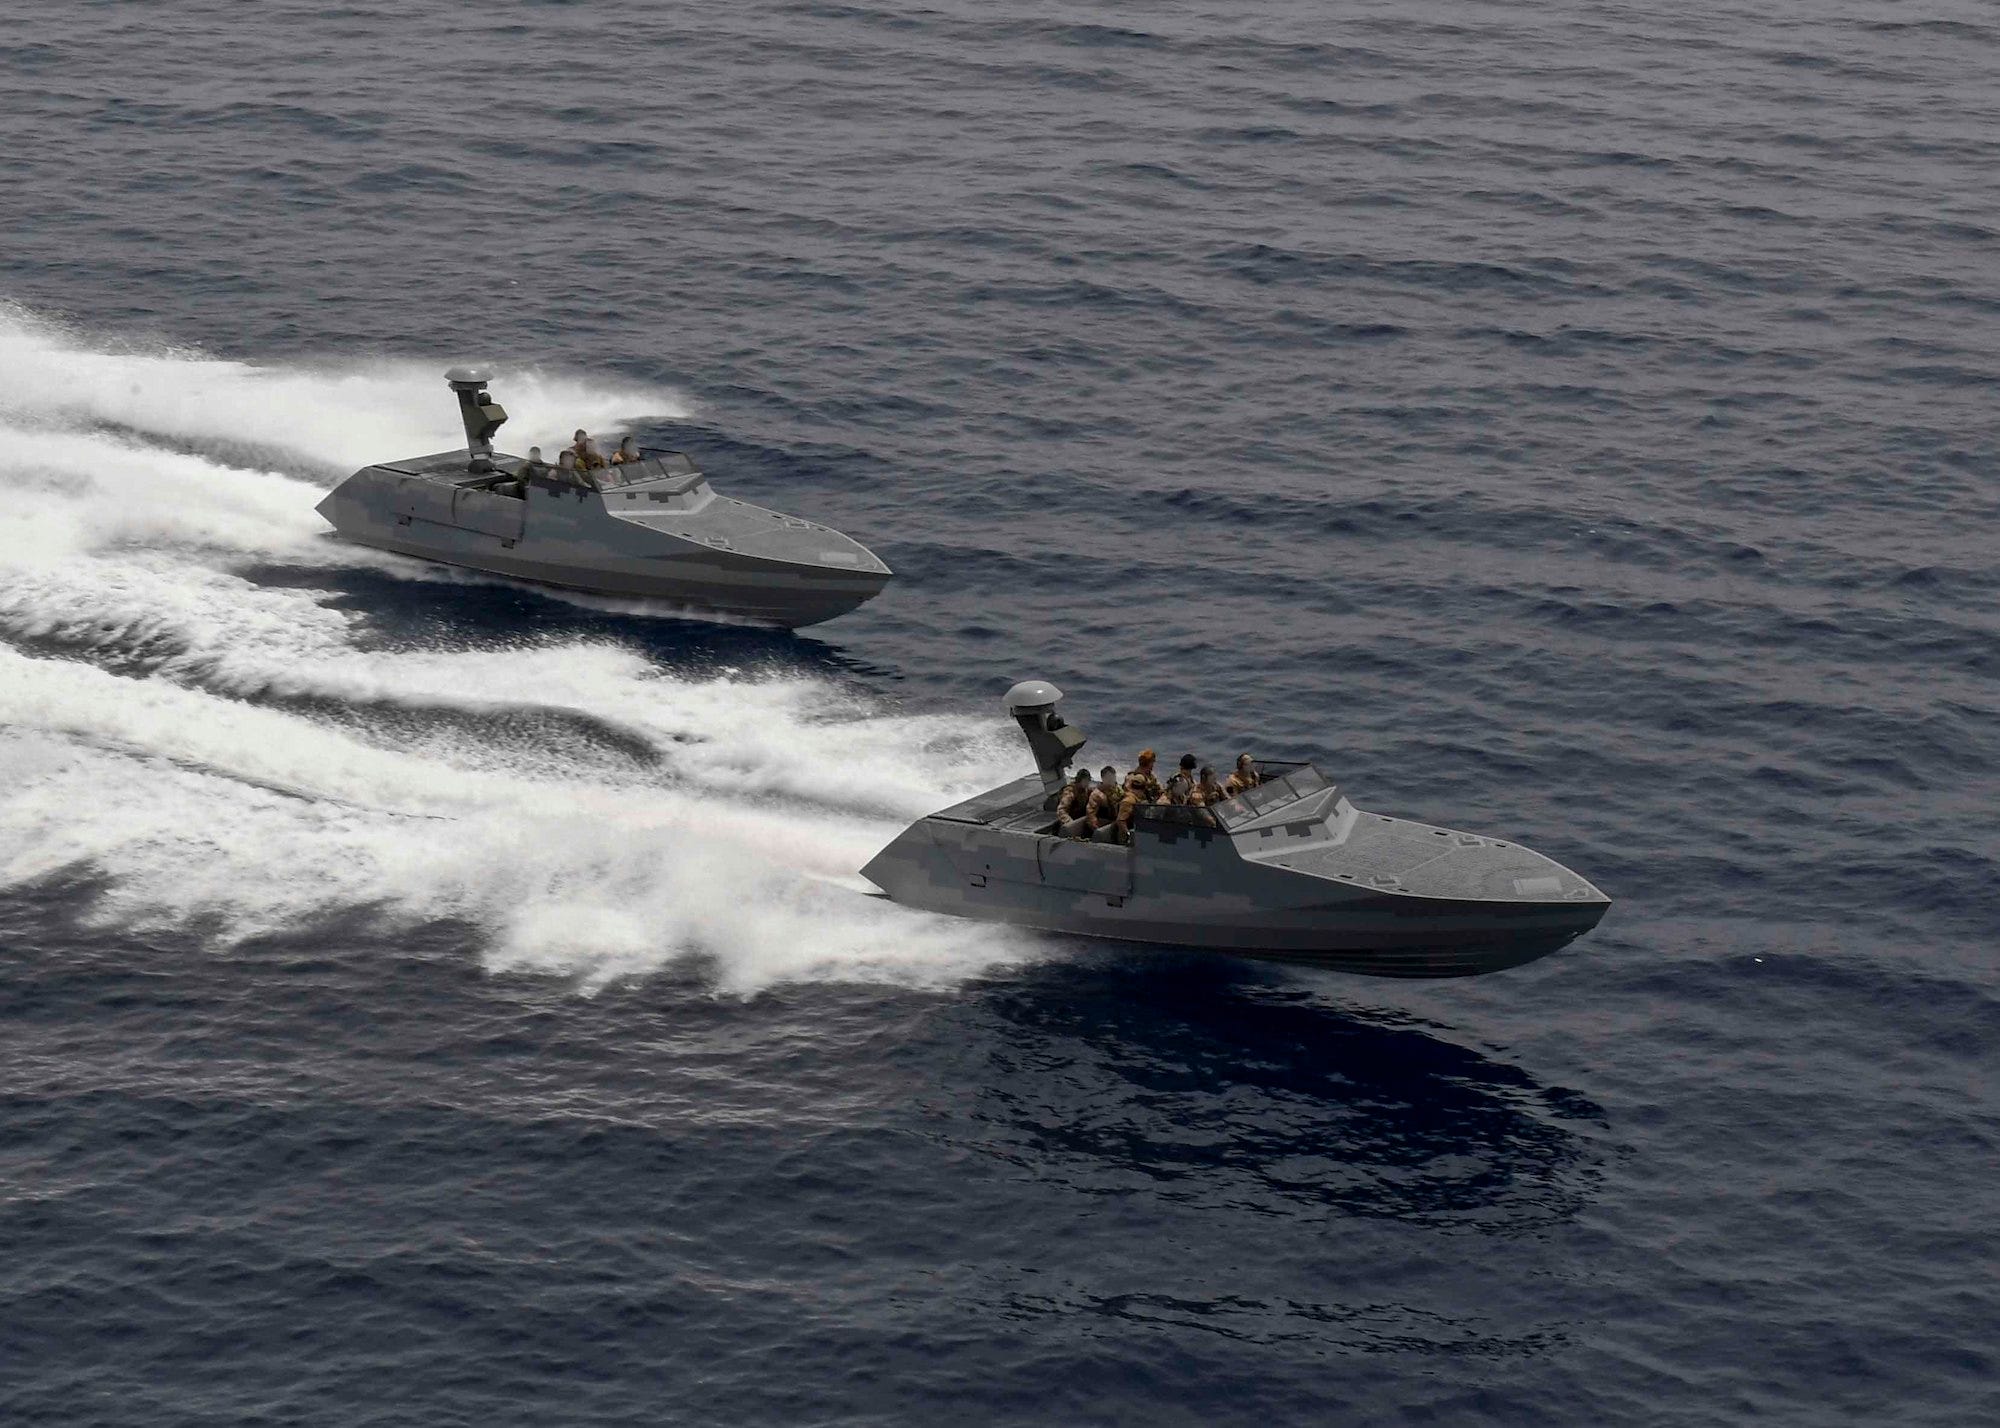 Navy special warfare combatant craft assault